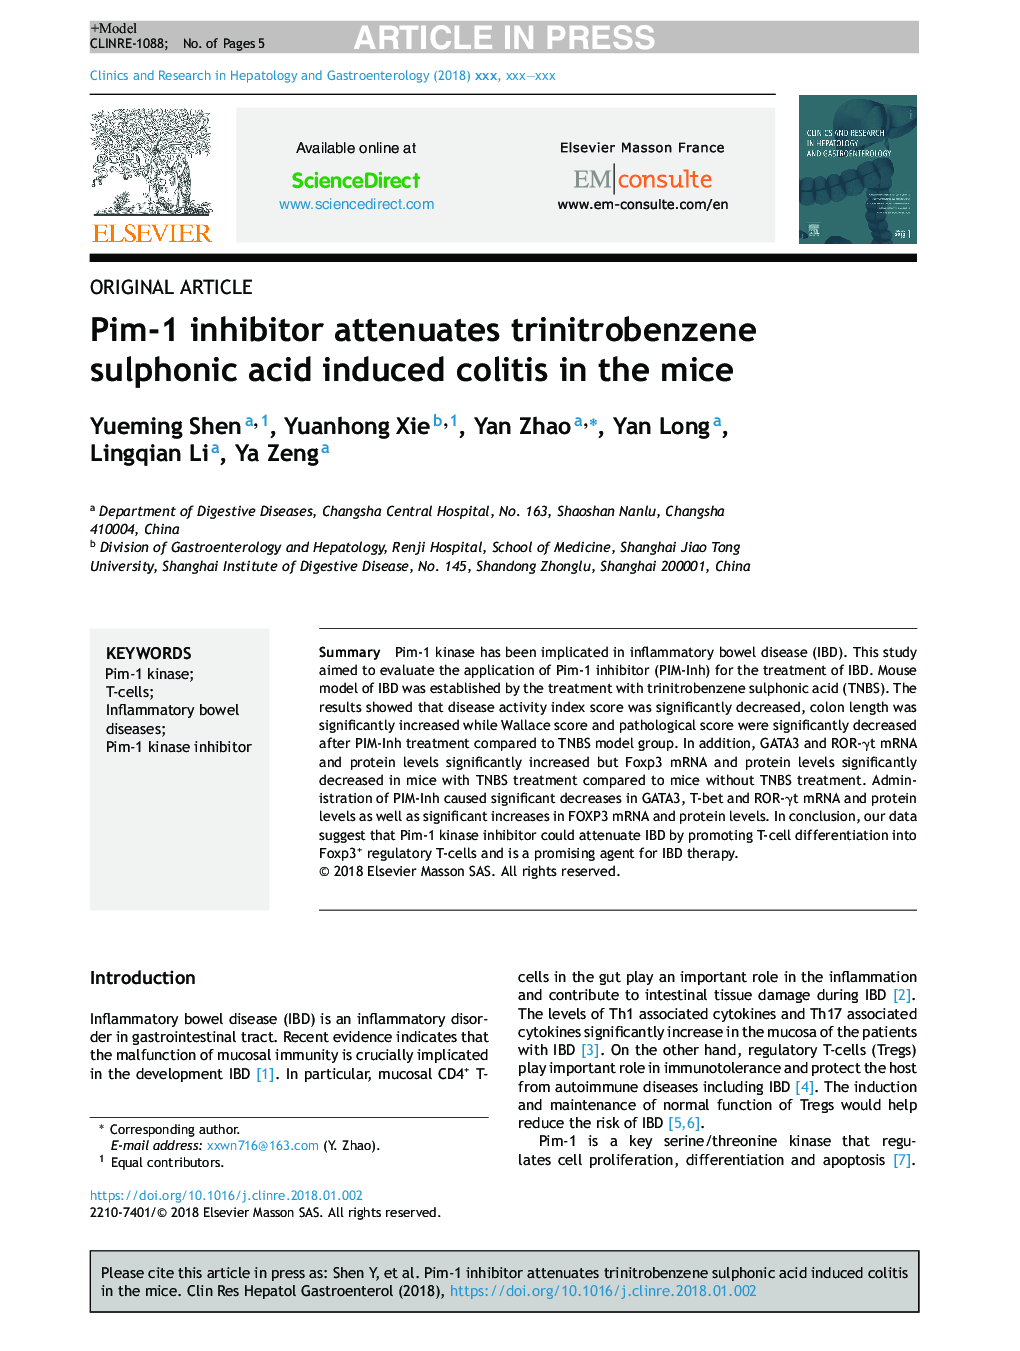 Pim-1 inhibitor attenuates trinitrobenzene sulphonic acid induced colitis in the mice